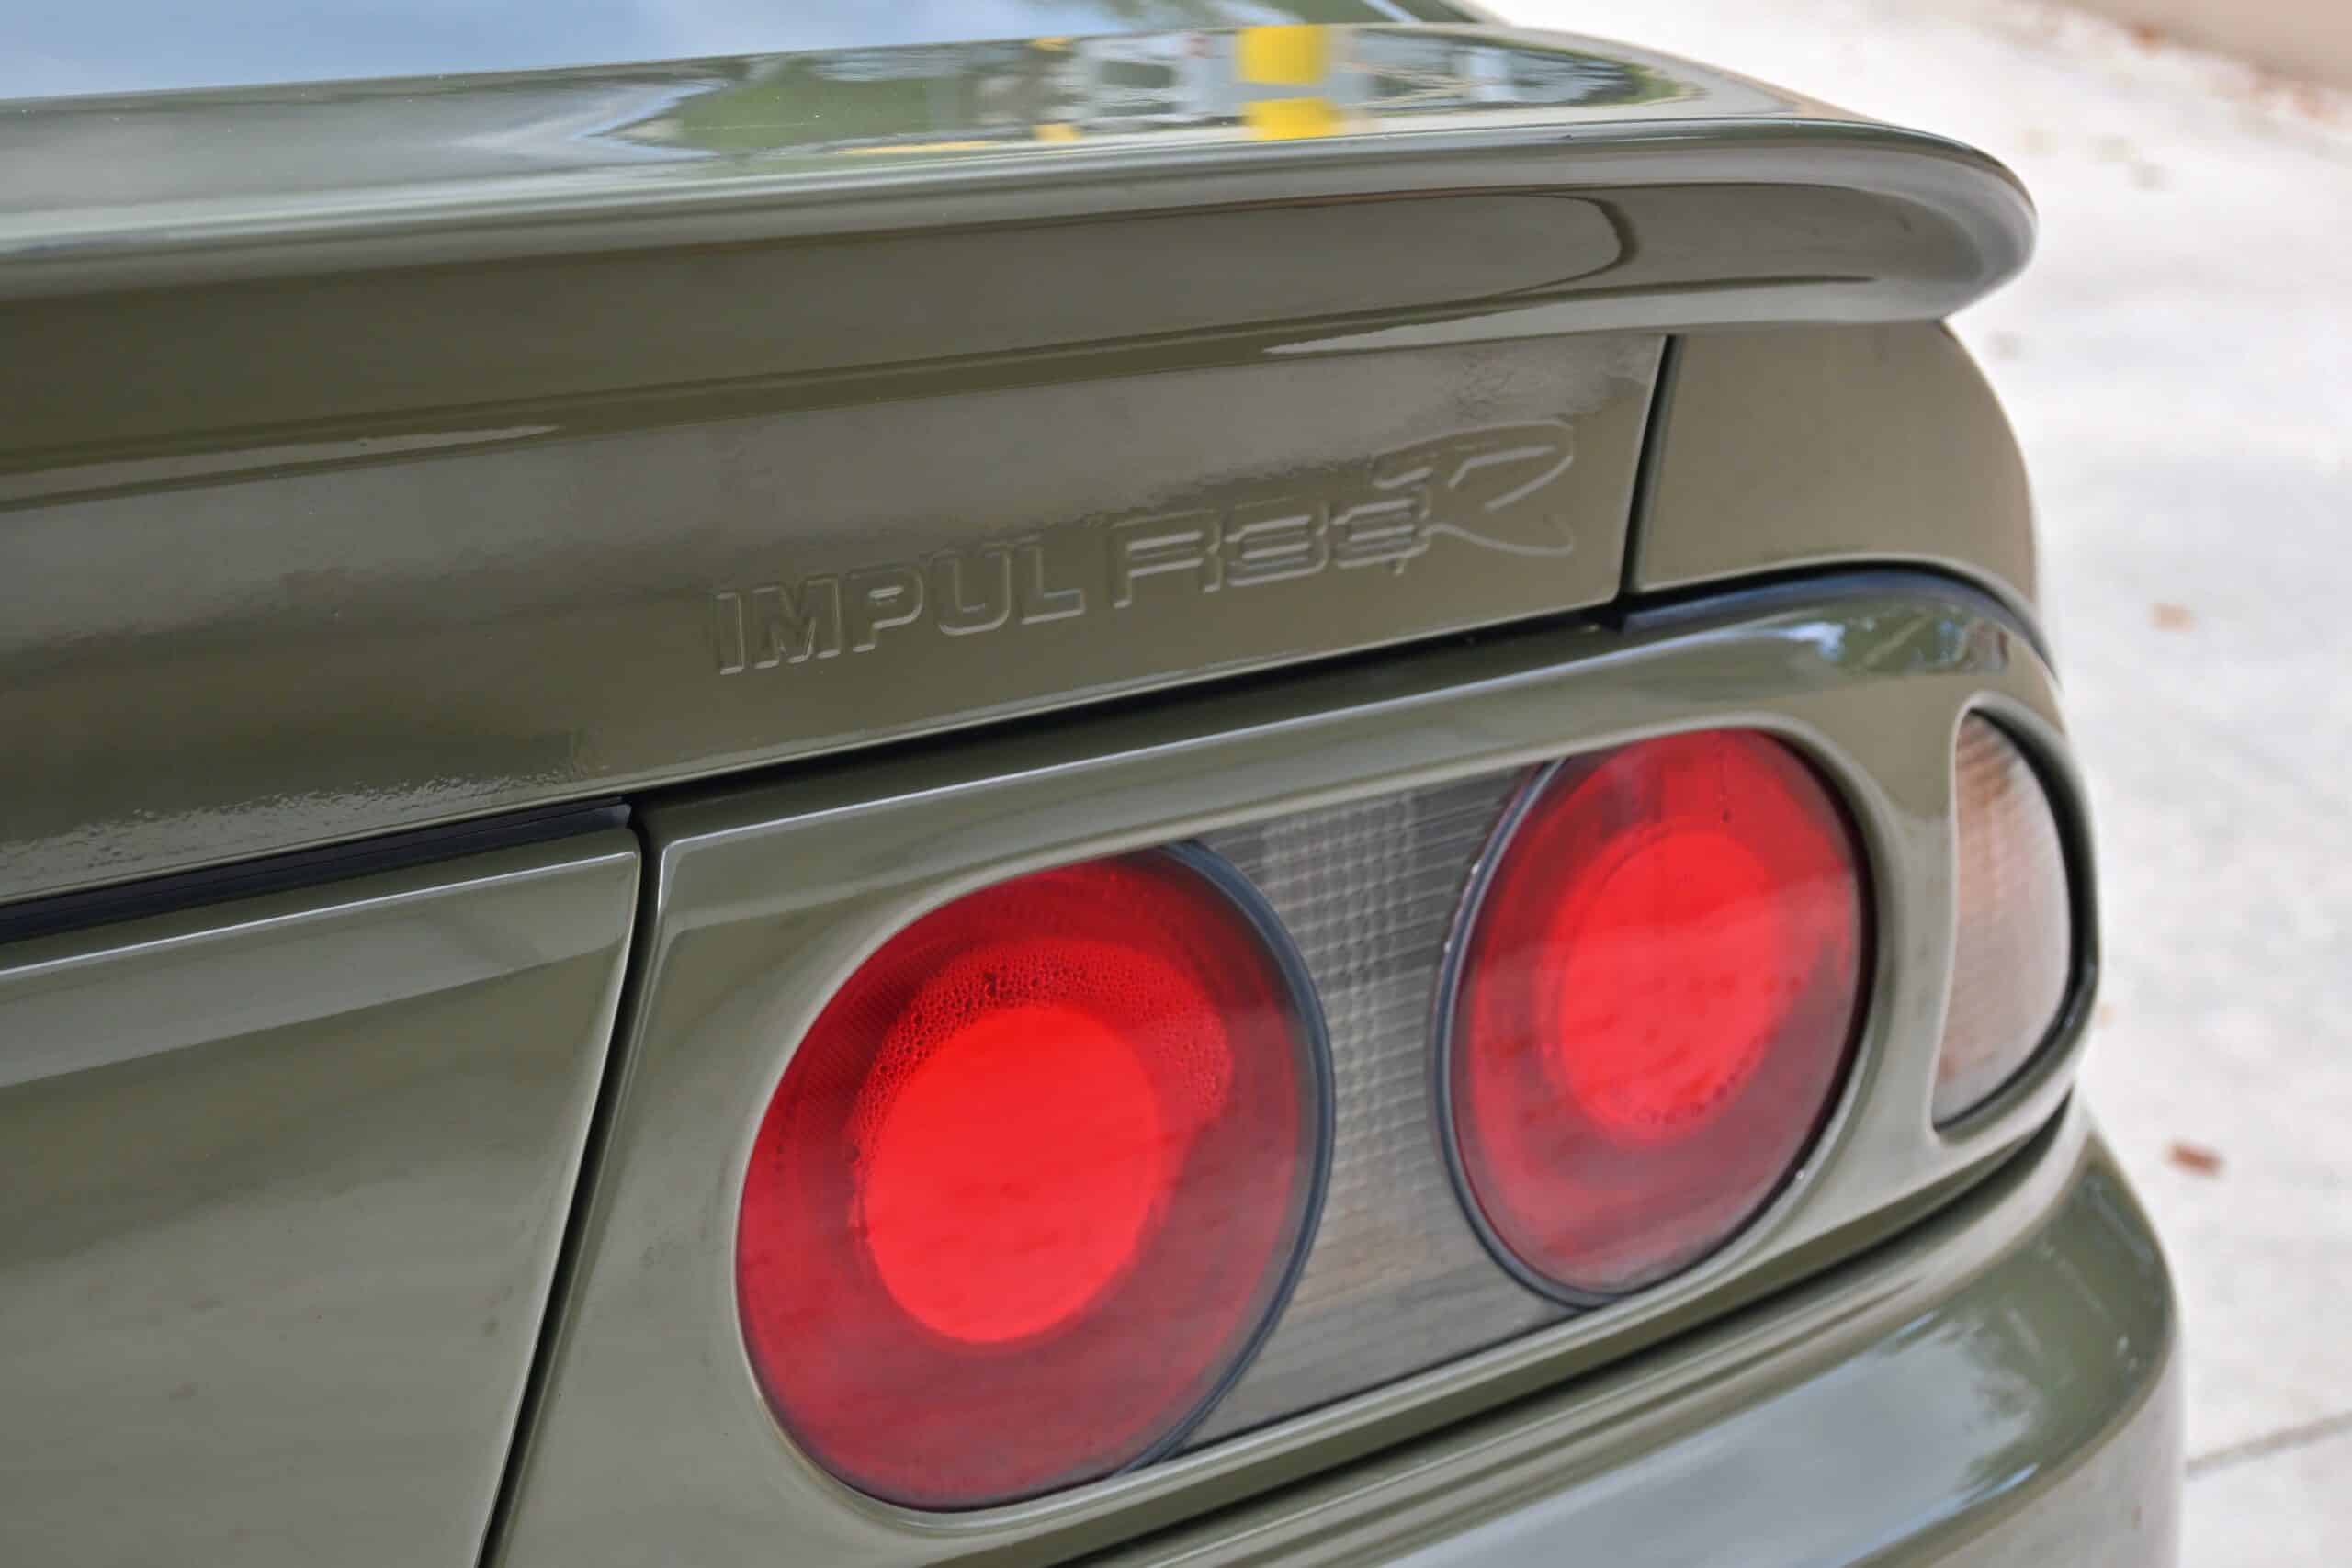 1993 Nissan Skyline IMPUL R33-R #21 of 200 Ever made – RB25 – HKS Single Turbo 500 Horsepower – Drift Ready